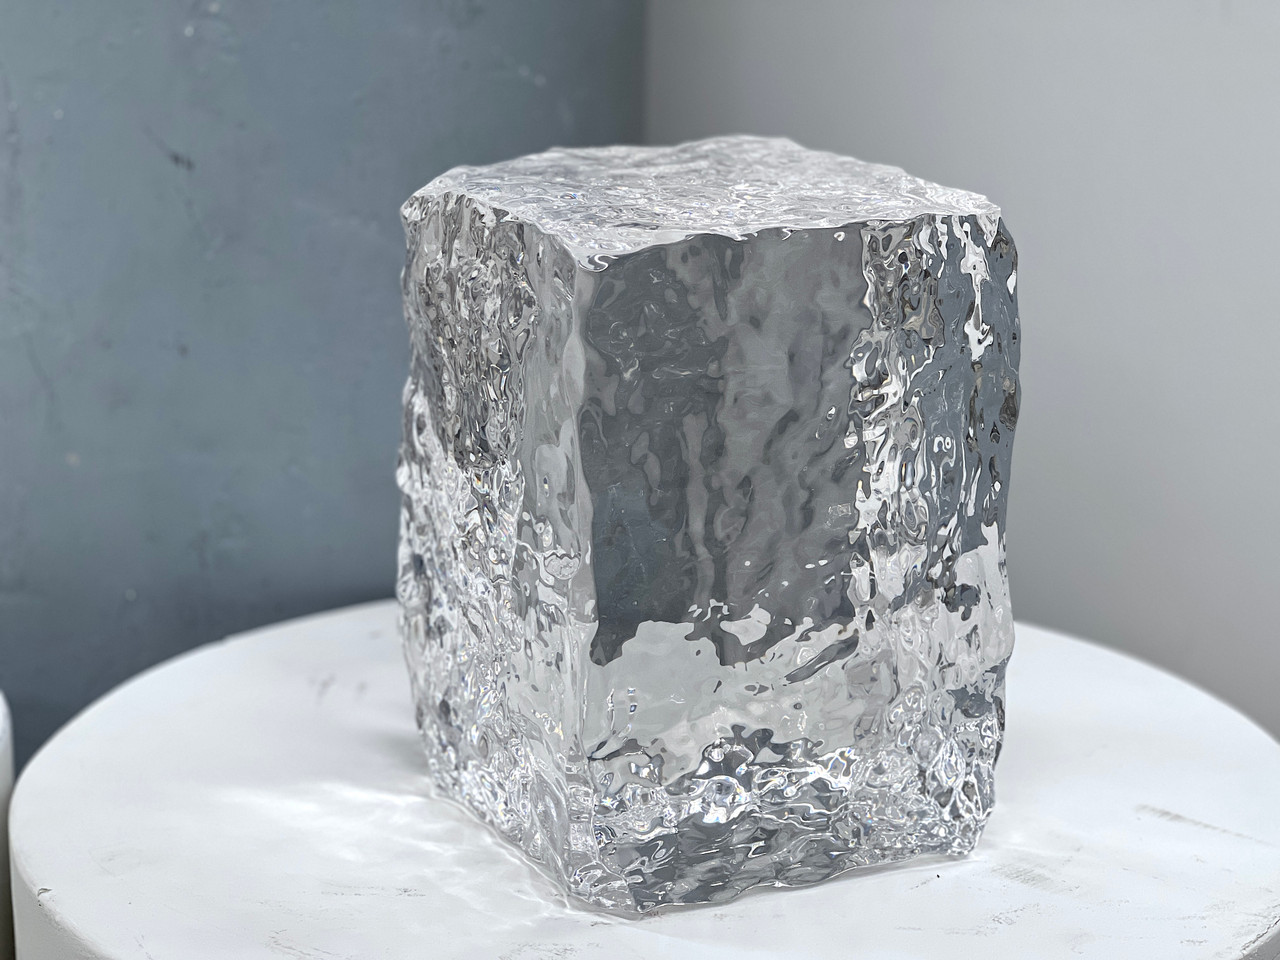 Trengove High Quality ICE BLOCK RENTAL